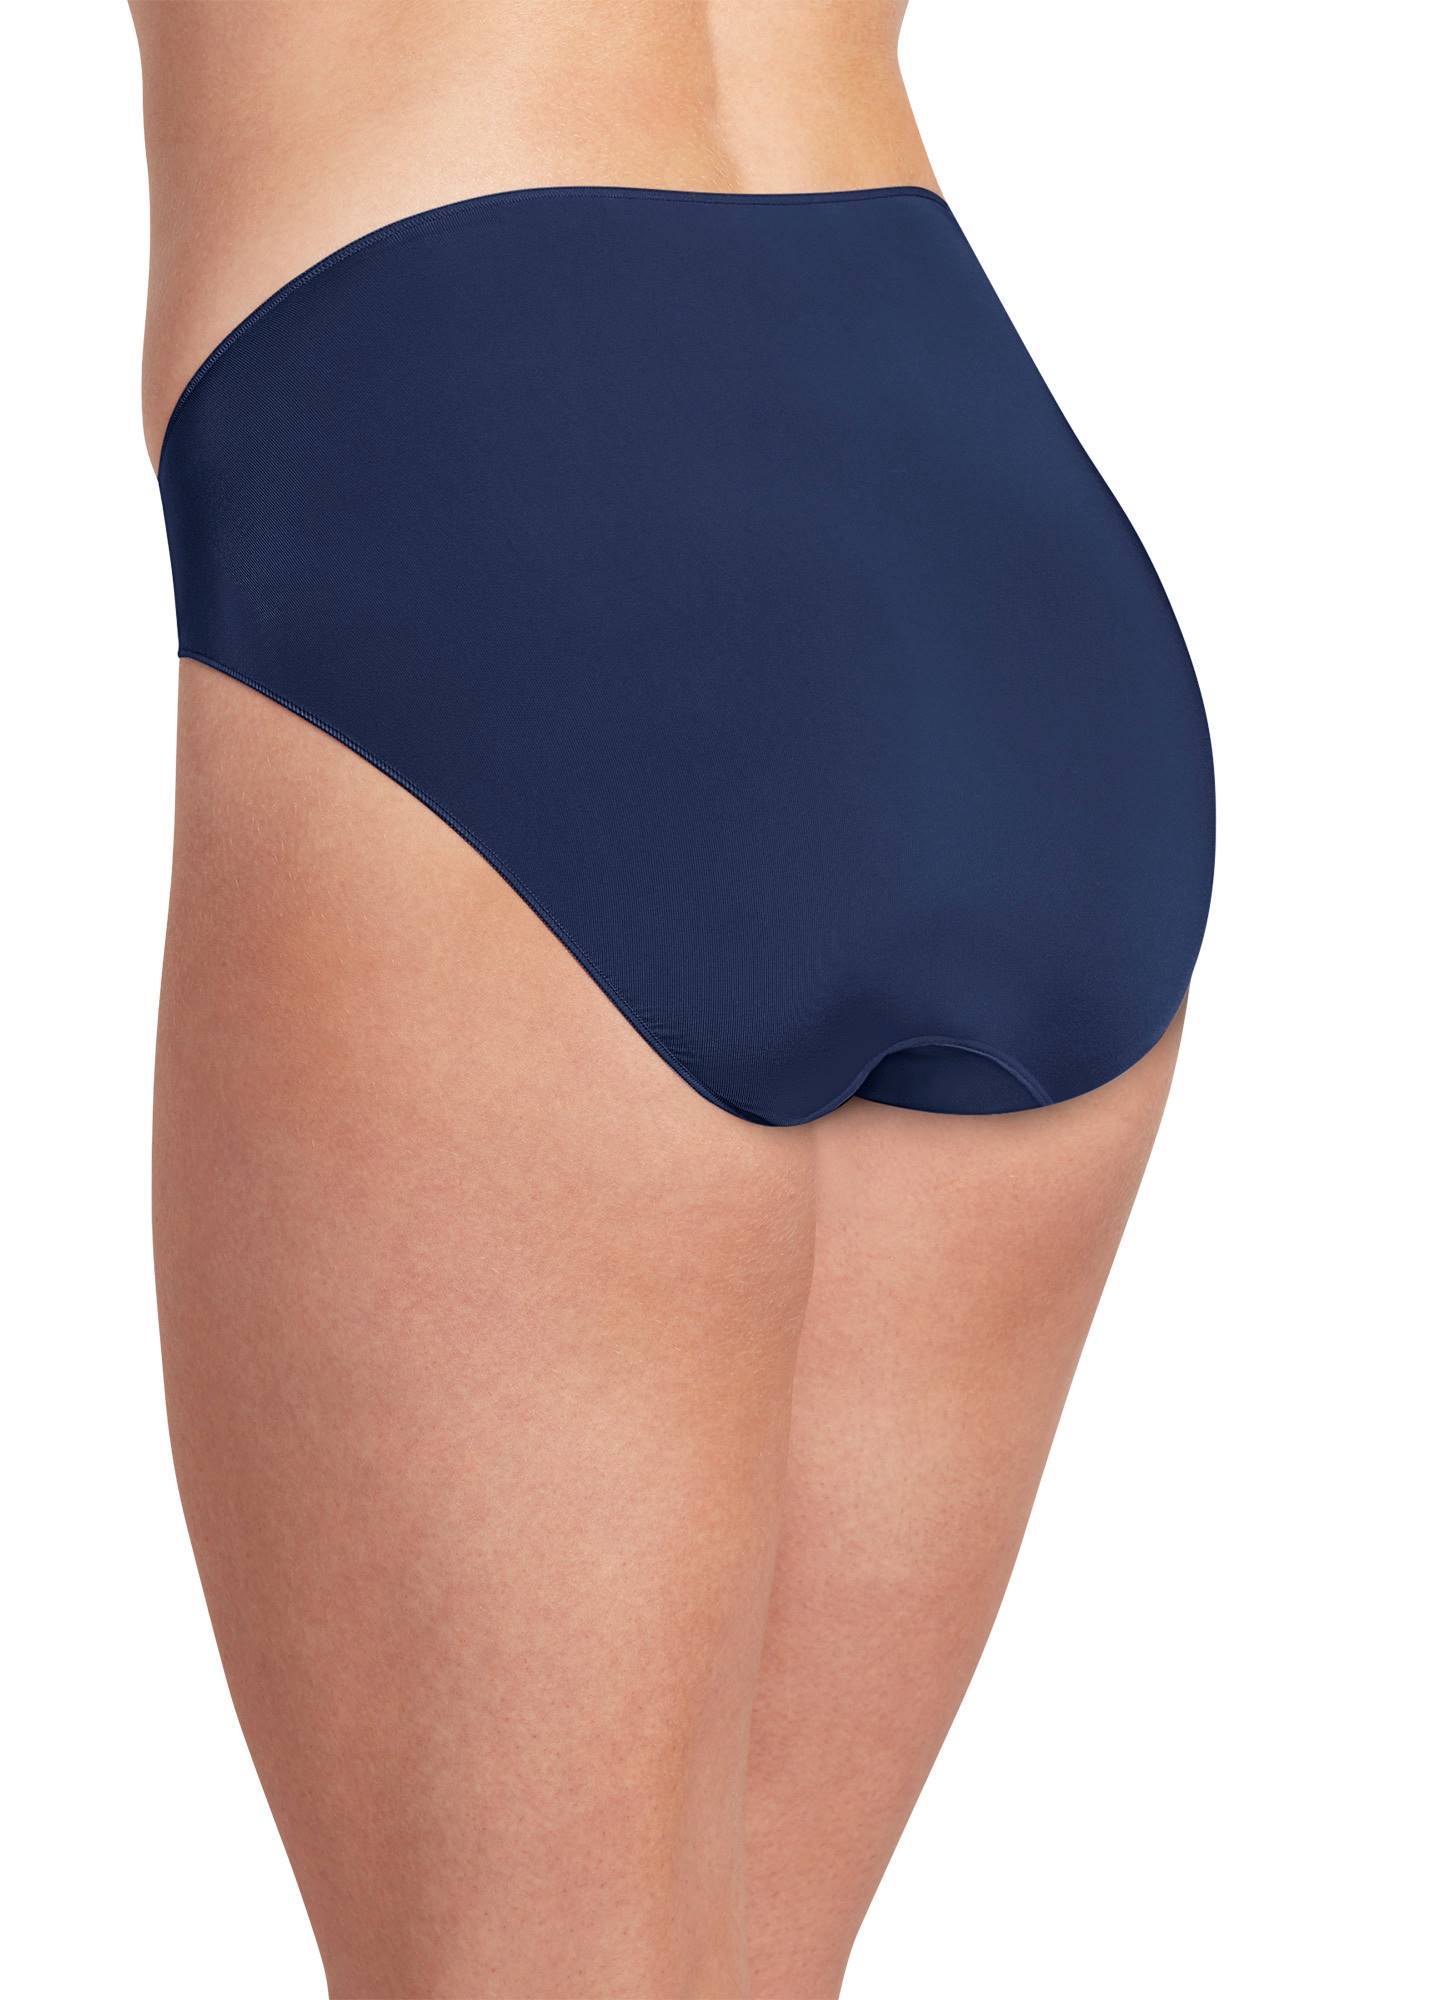 Jockey Women's No Panty Line Promise Tactel Hip Brief 7 Deep Beige